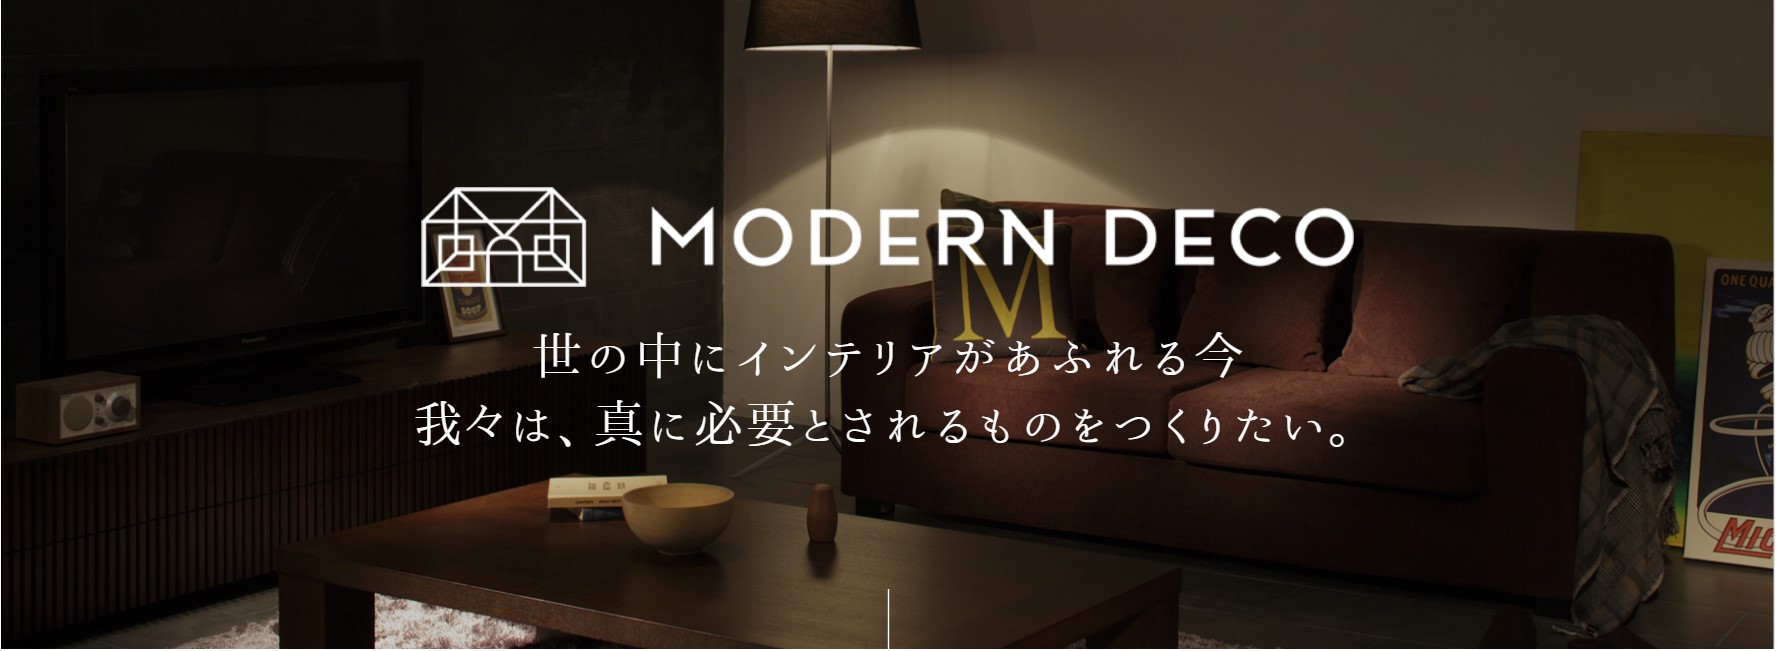 MODERN DECOの公式サイトのキャプチャ画像